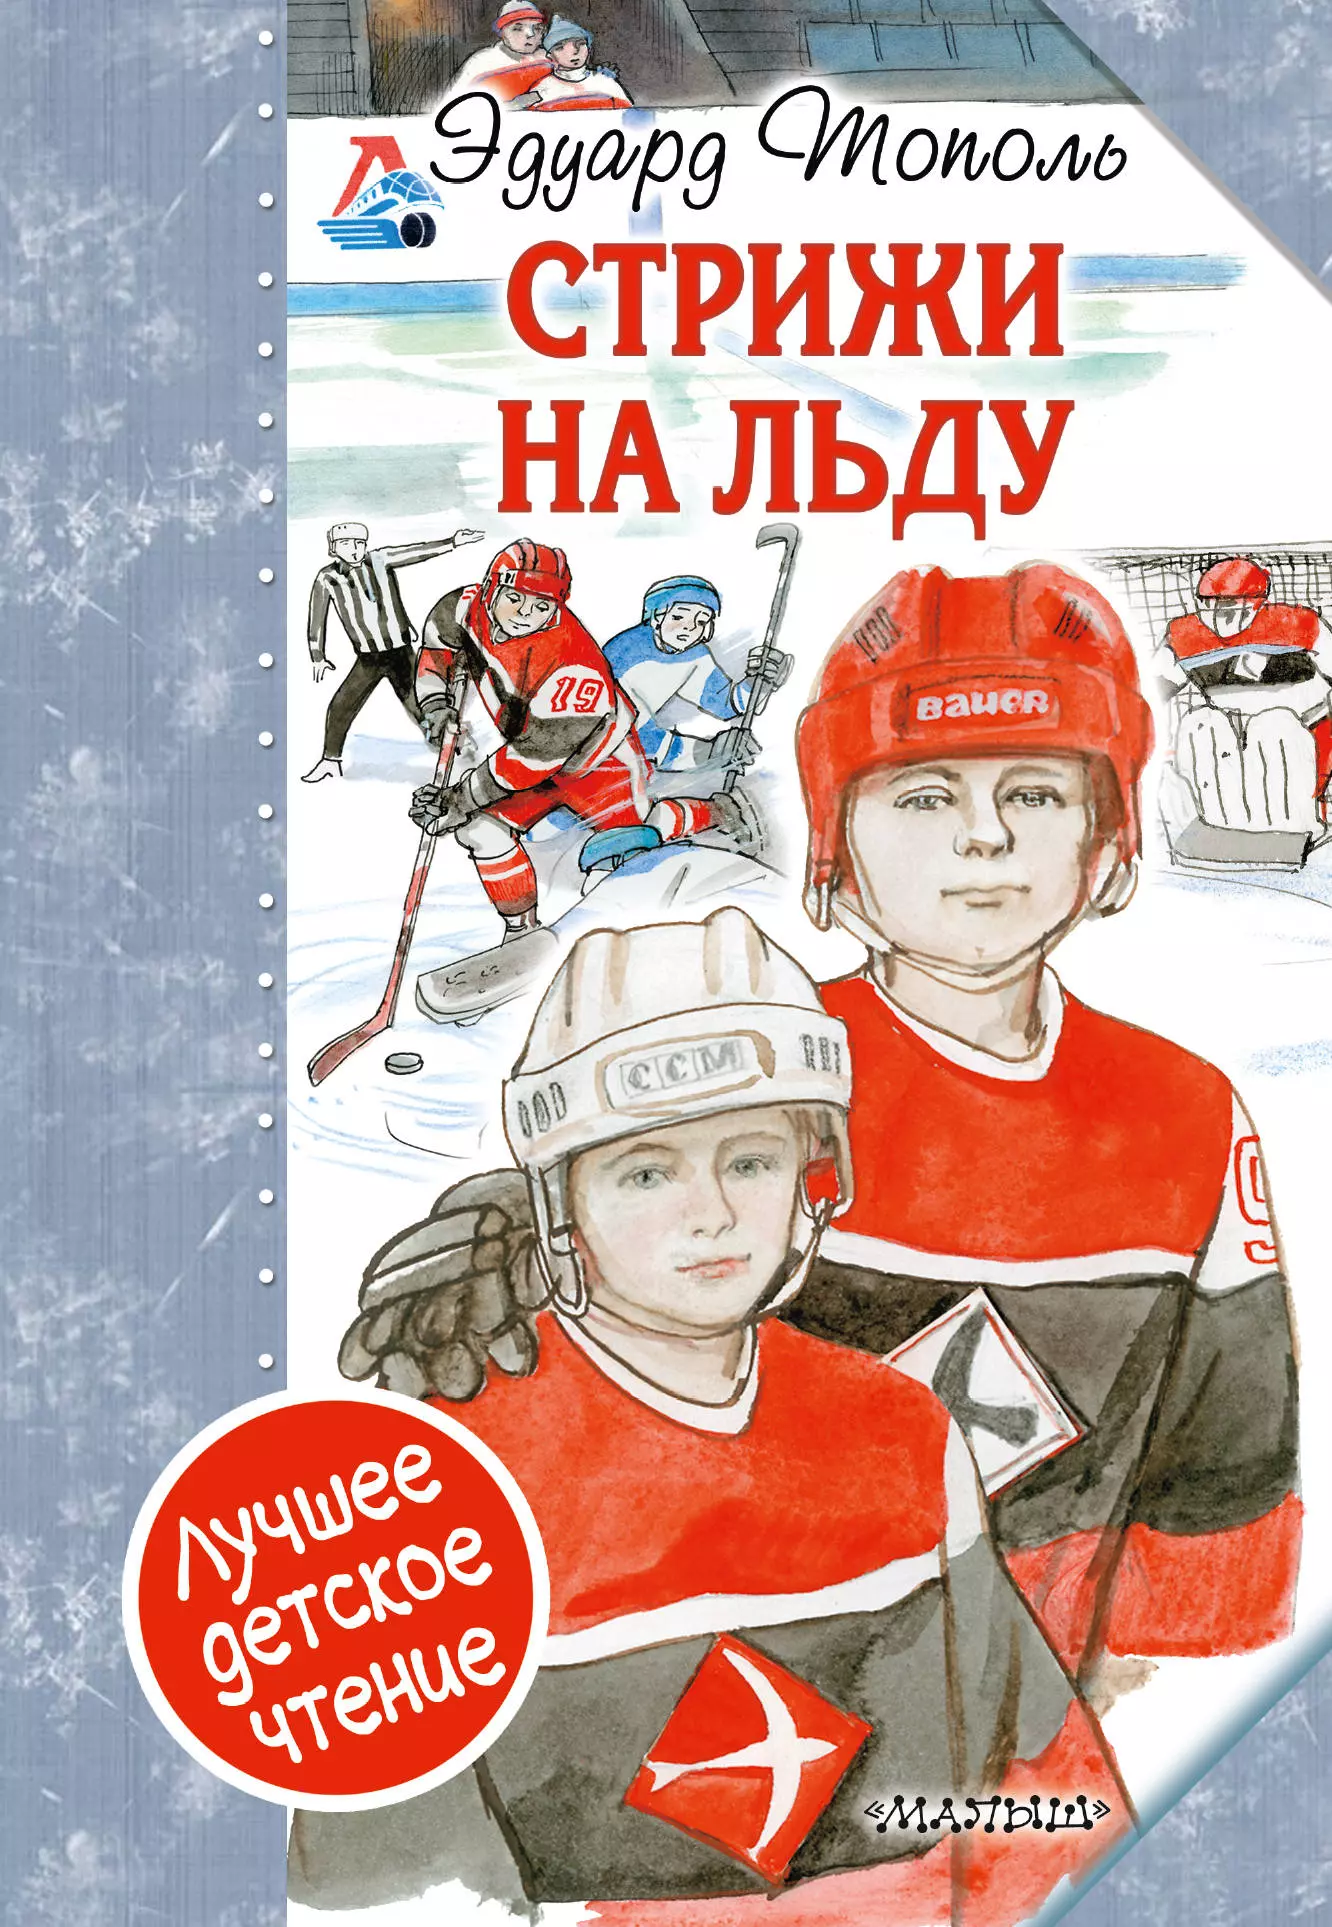 Книги про лед. Детские книги про хоккей. Стрижи на льду книга.